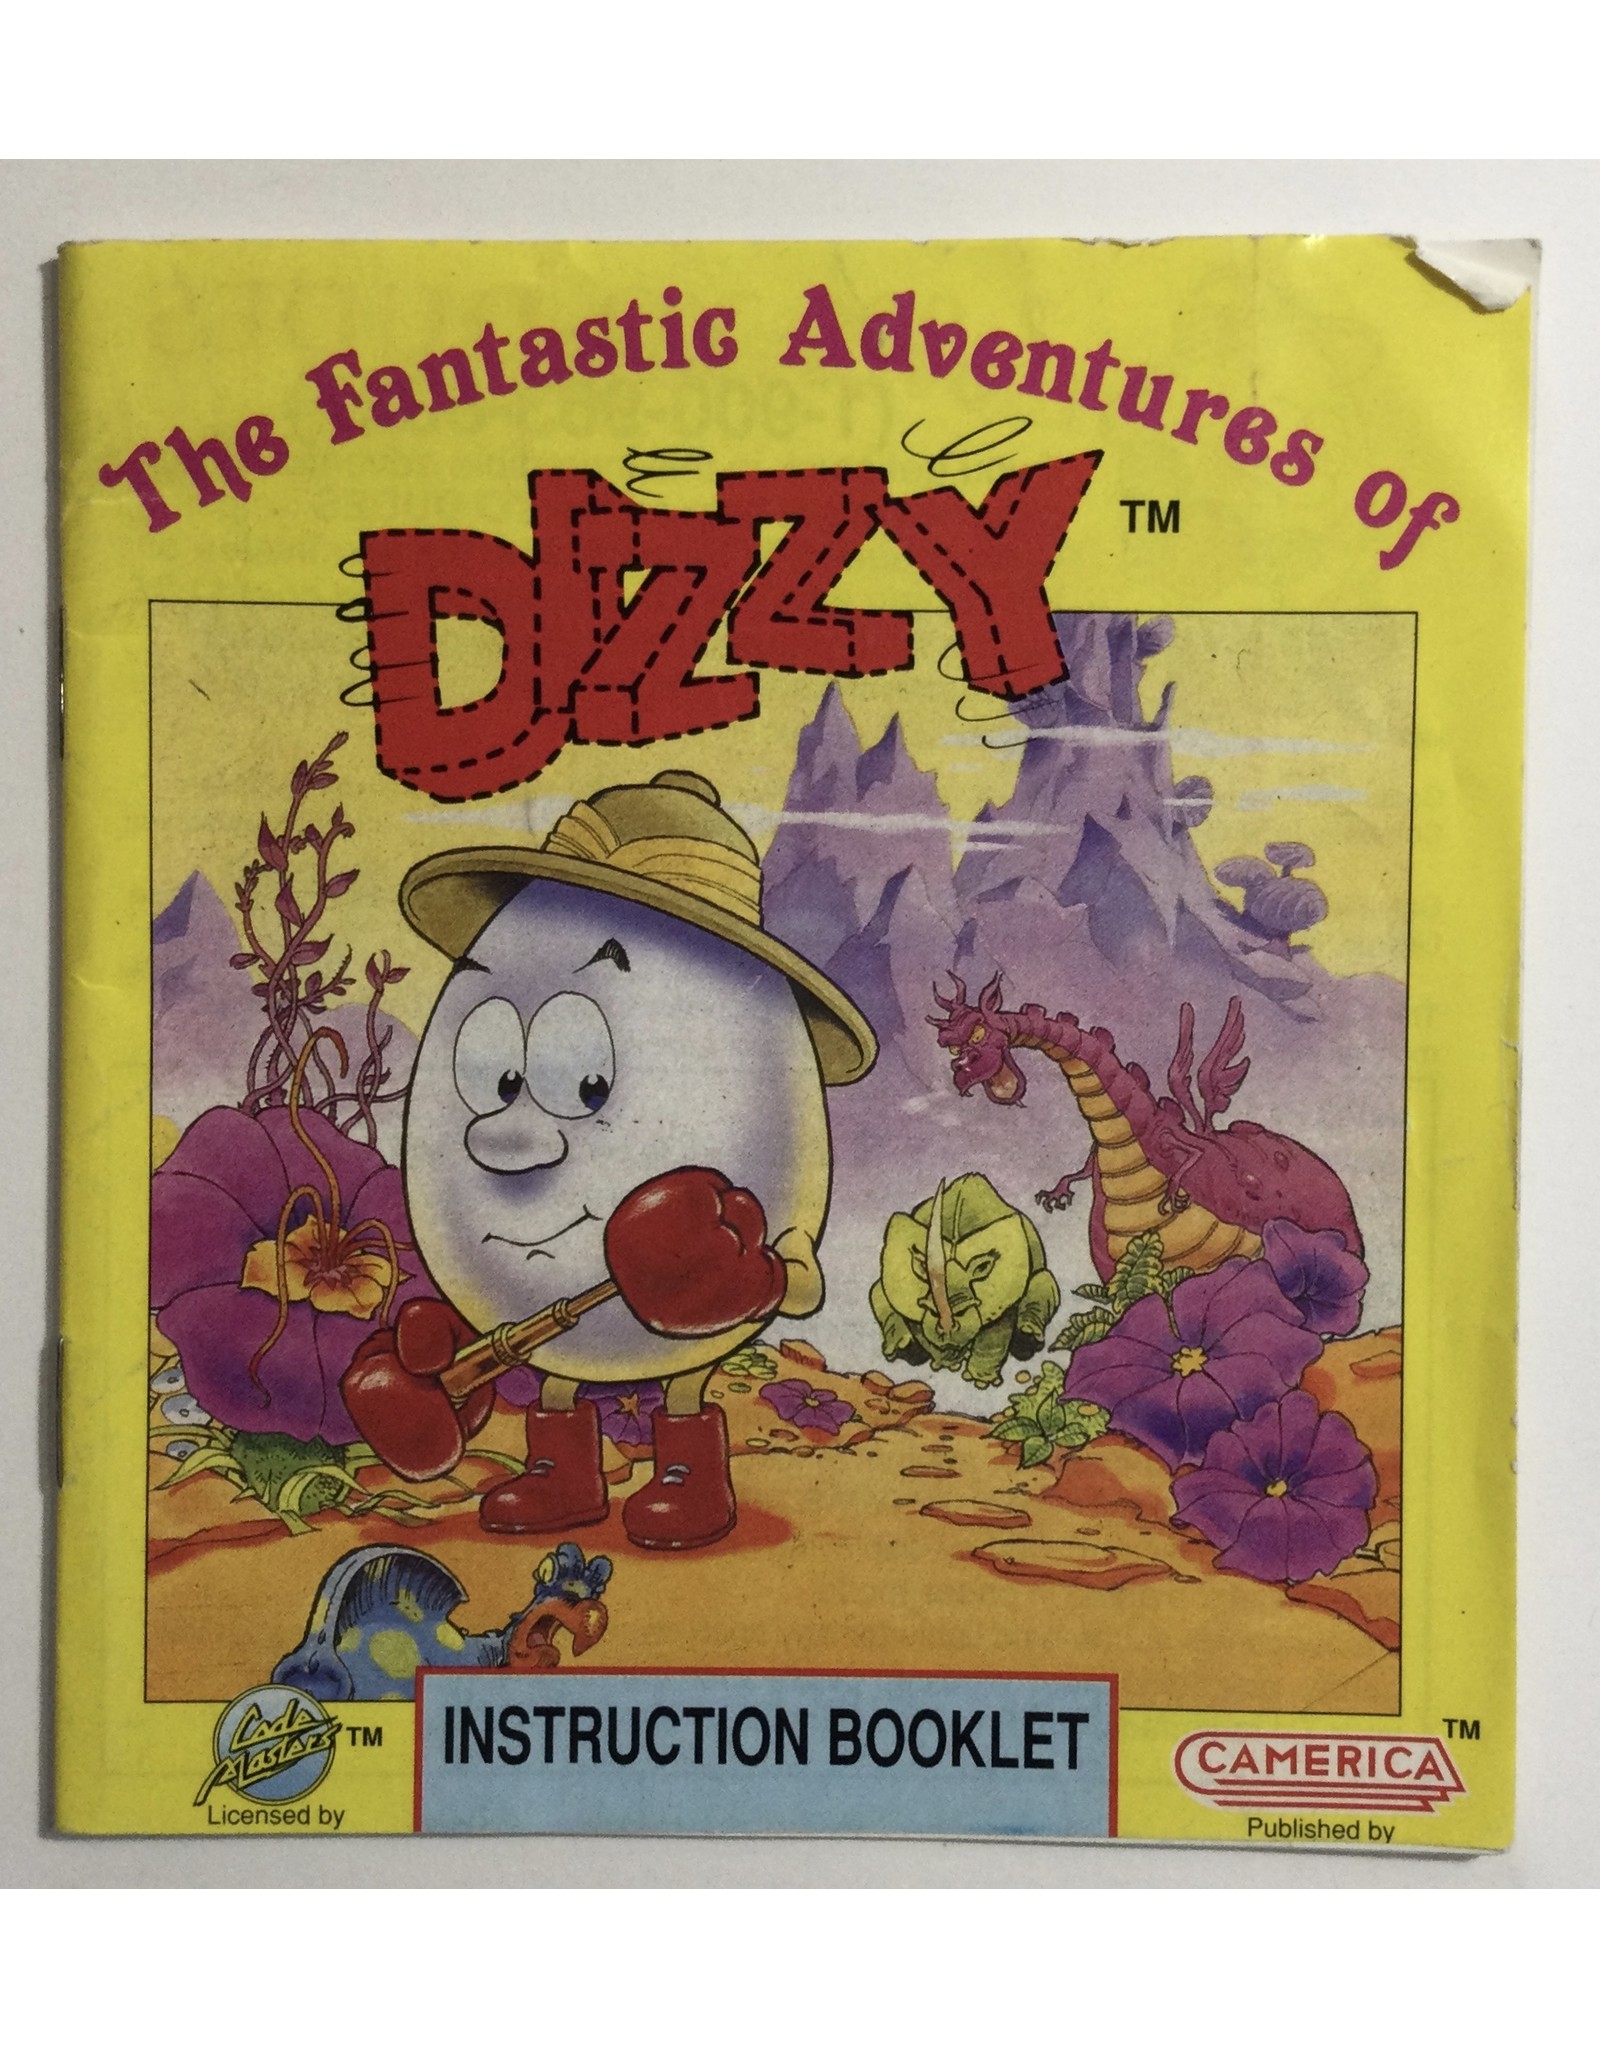 Camerica The Fantastic Adventures of Dizzy for Nintendo Entertainment system (NES) - CIB